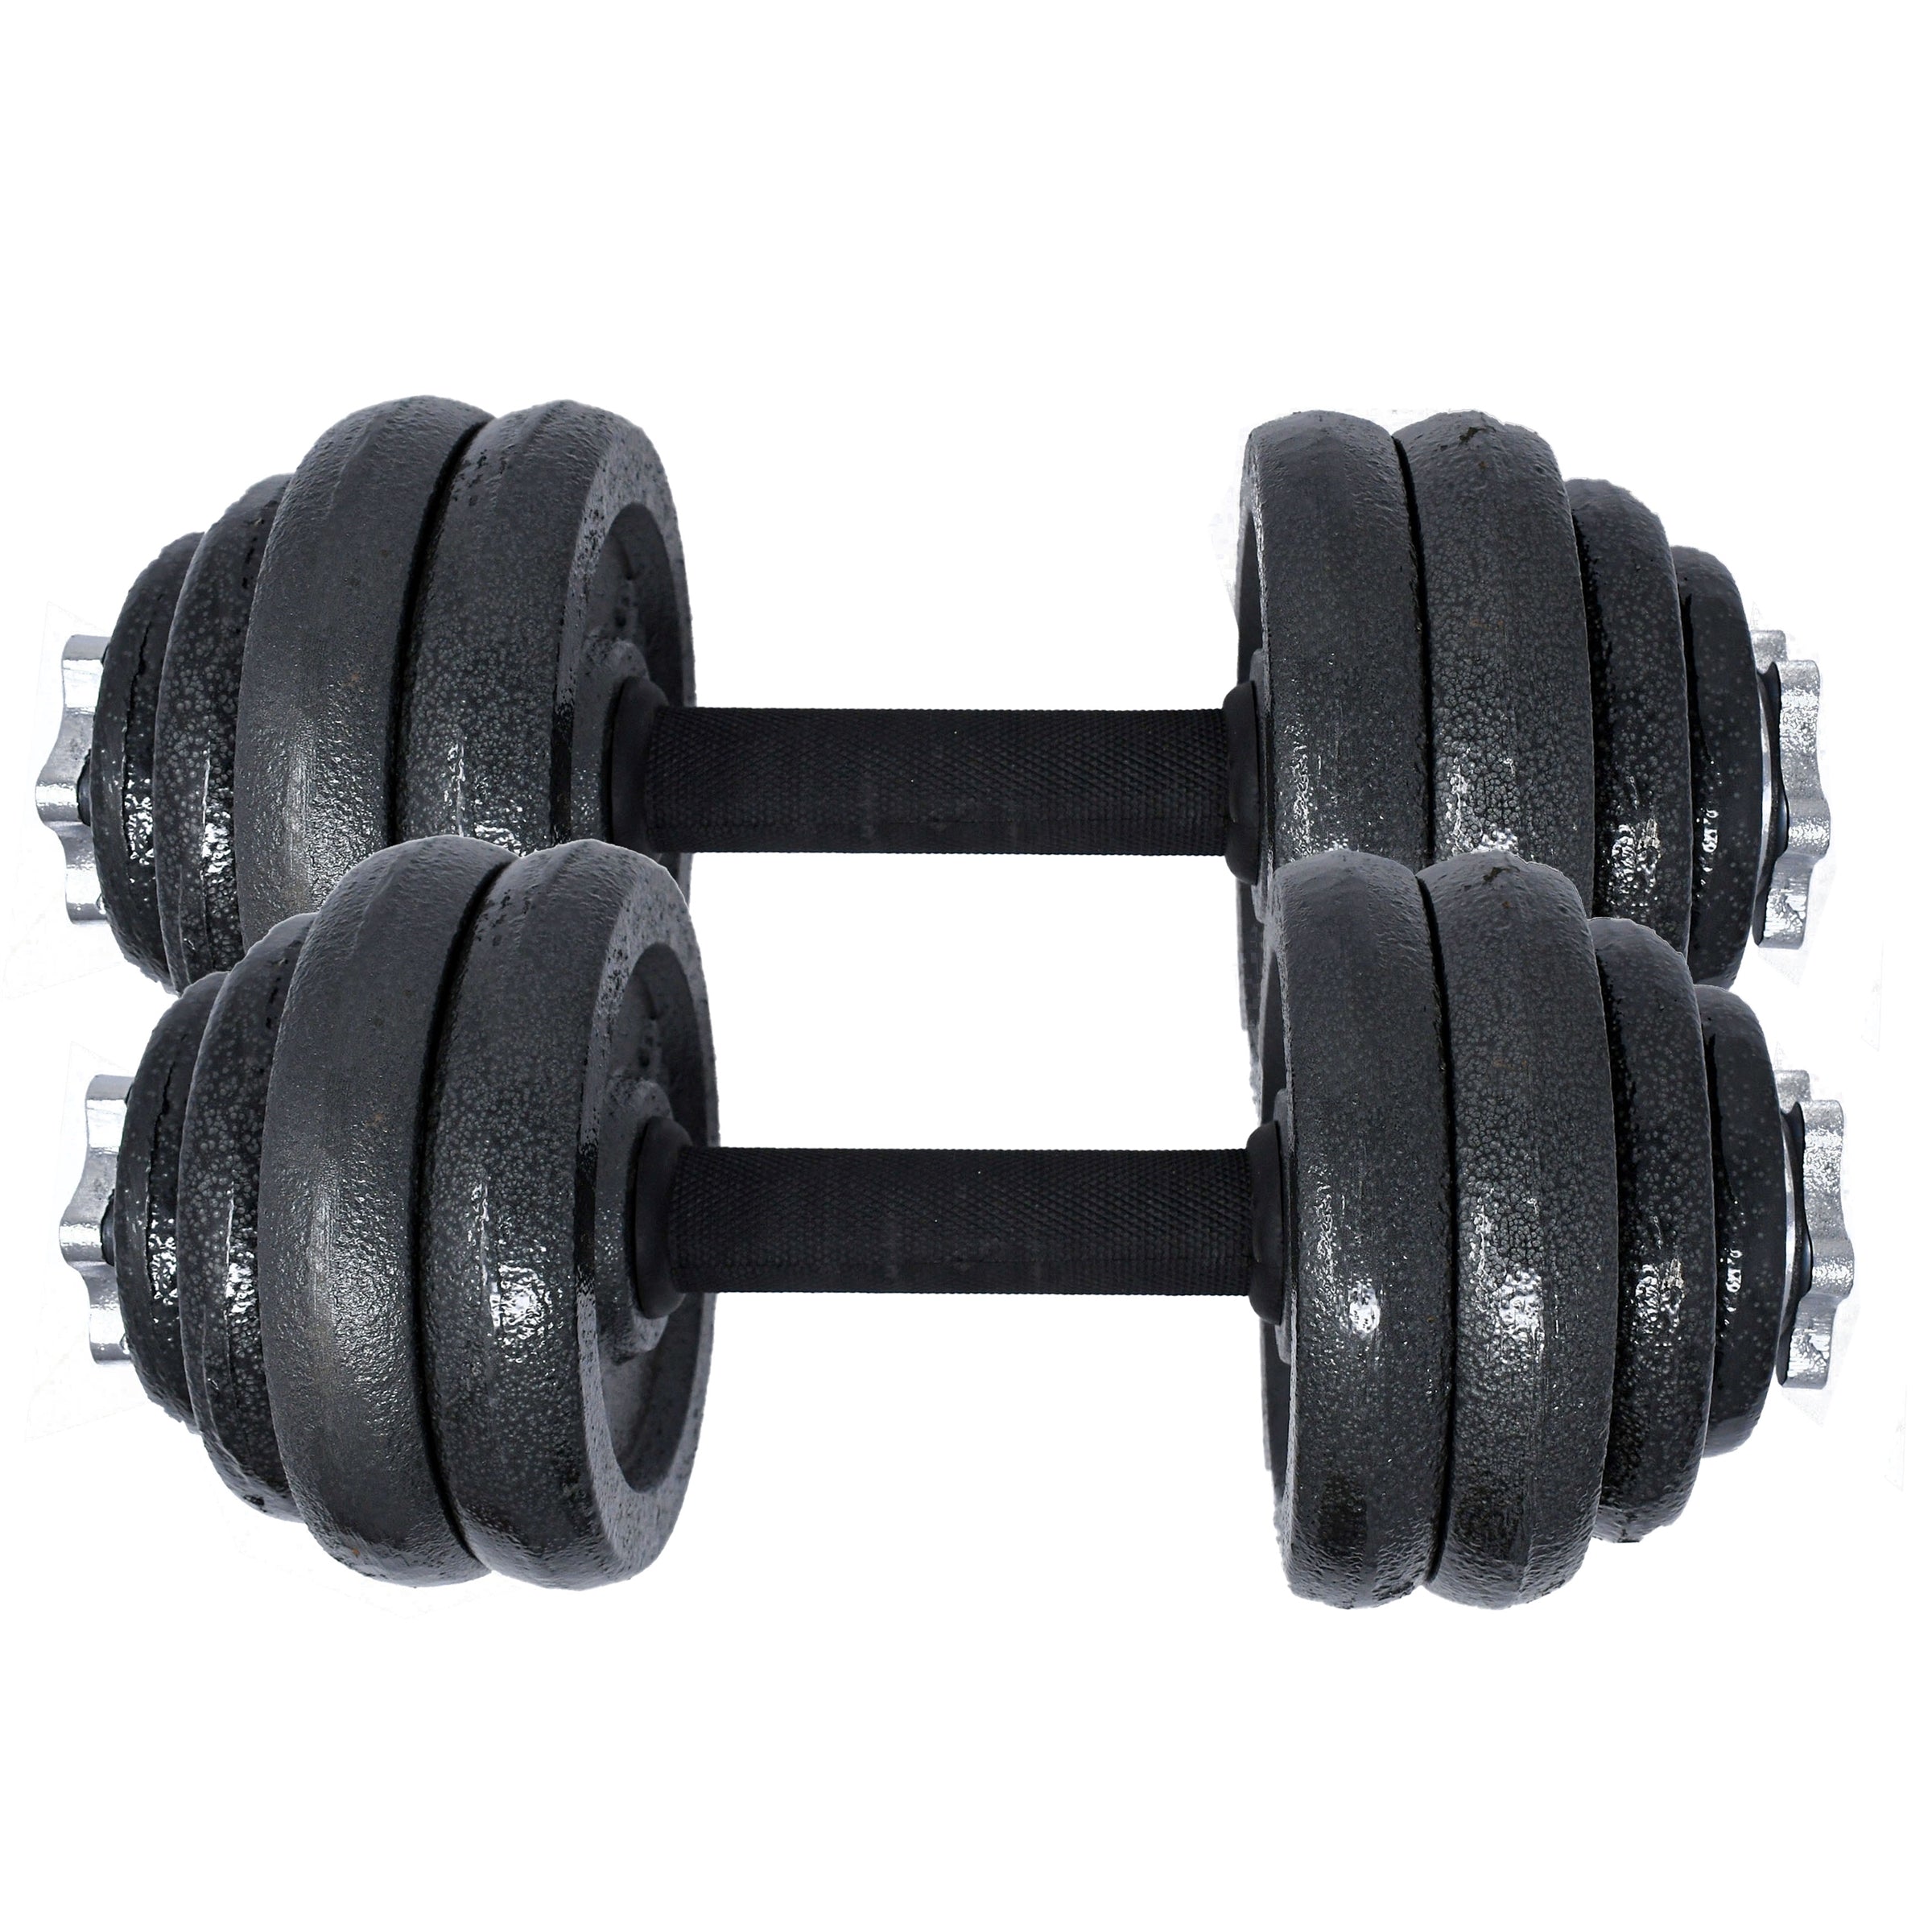 Cast Iron Adjustable Dumbbell Set for Home Gym - 66 lbs (30 kg)